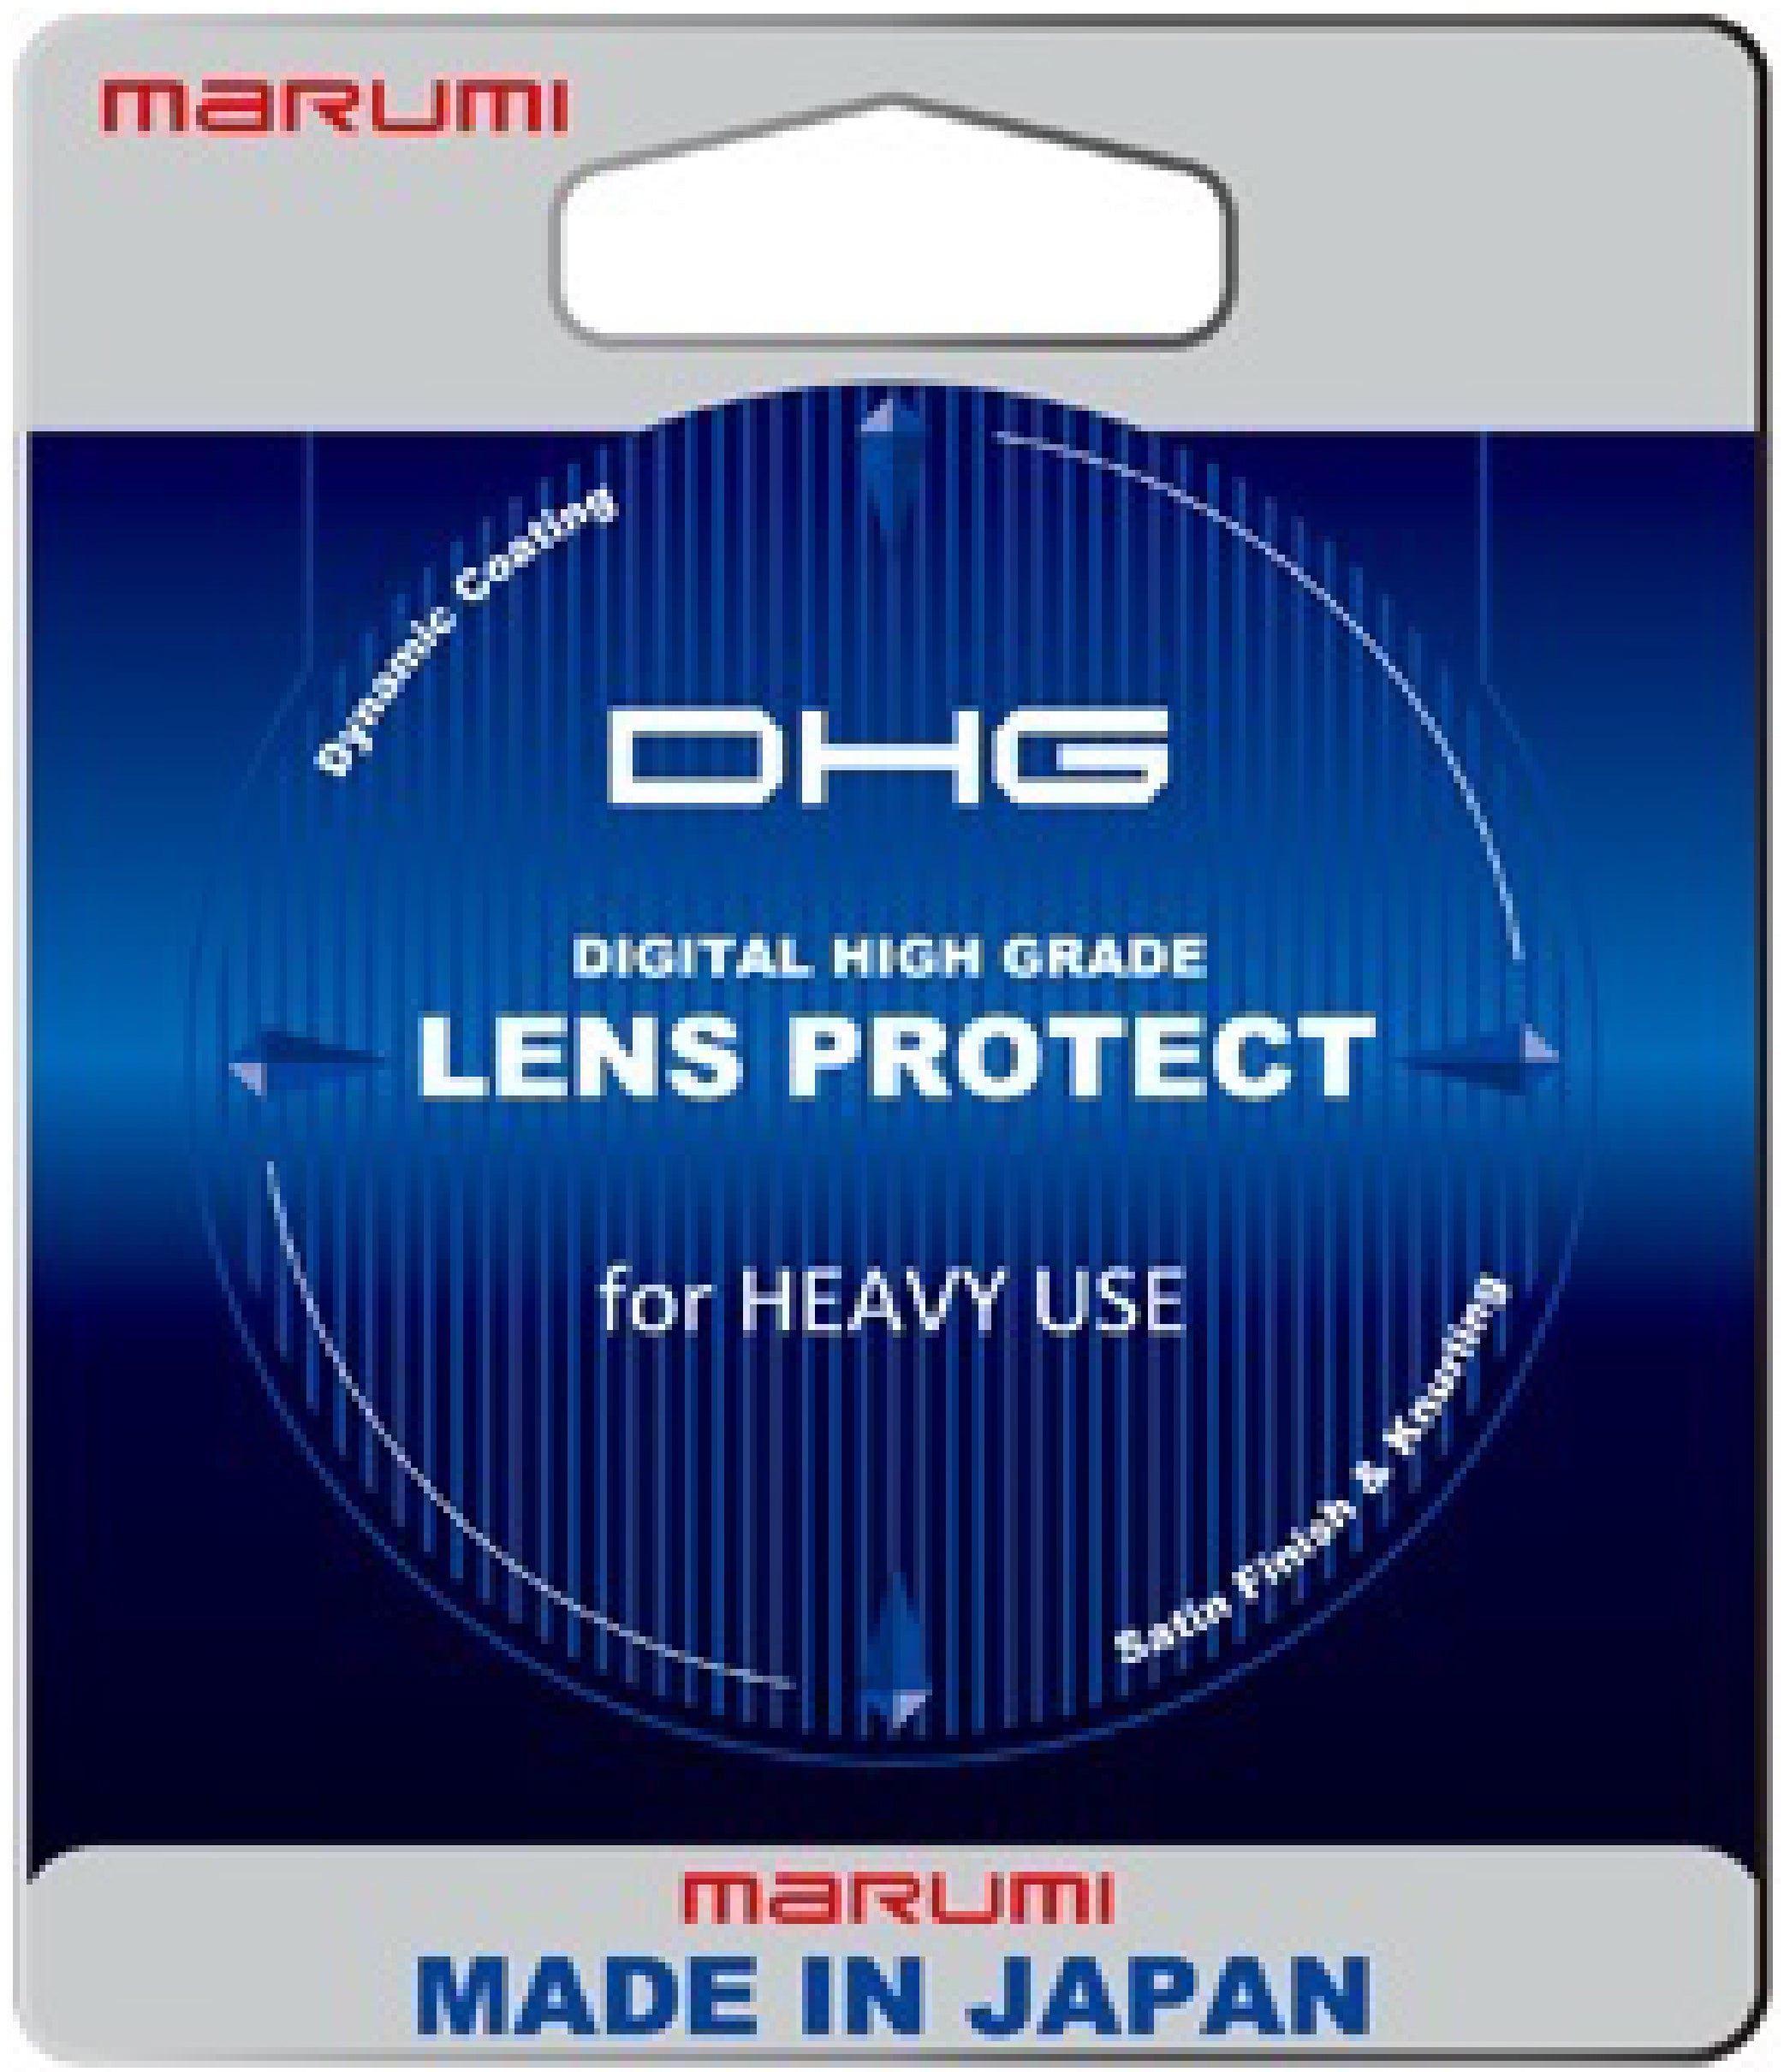 Marumi DHG Lens Protect